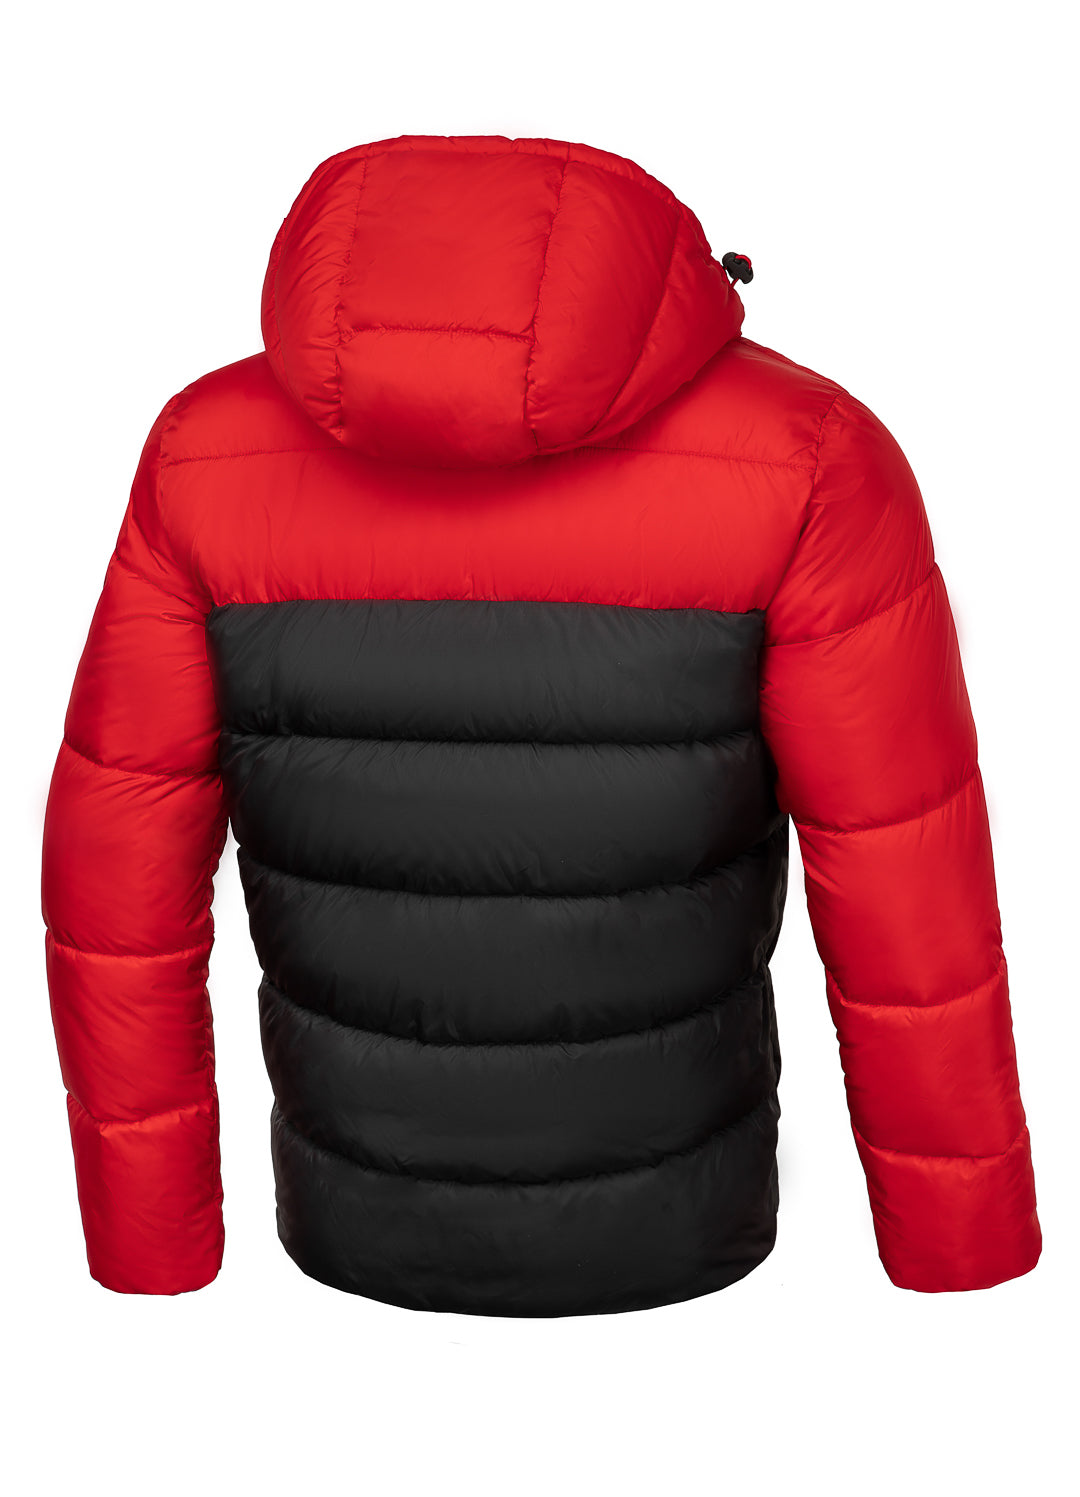 Men's Jacket Mobley Red/Black - Pitbull West Coast International Store 